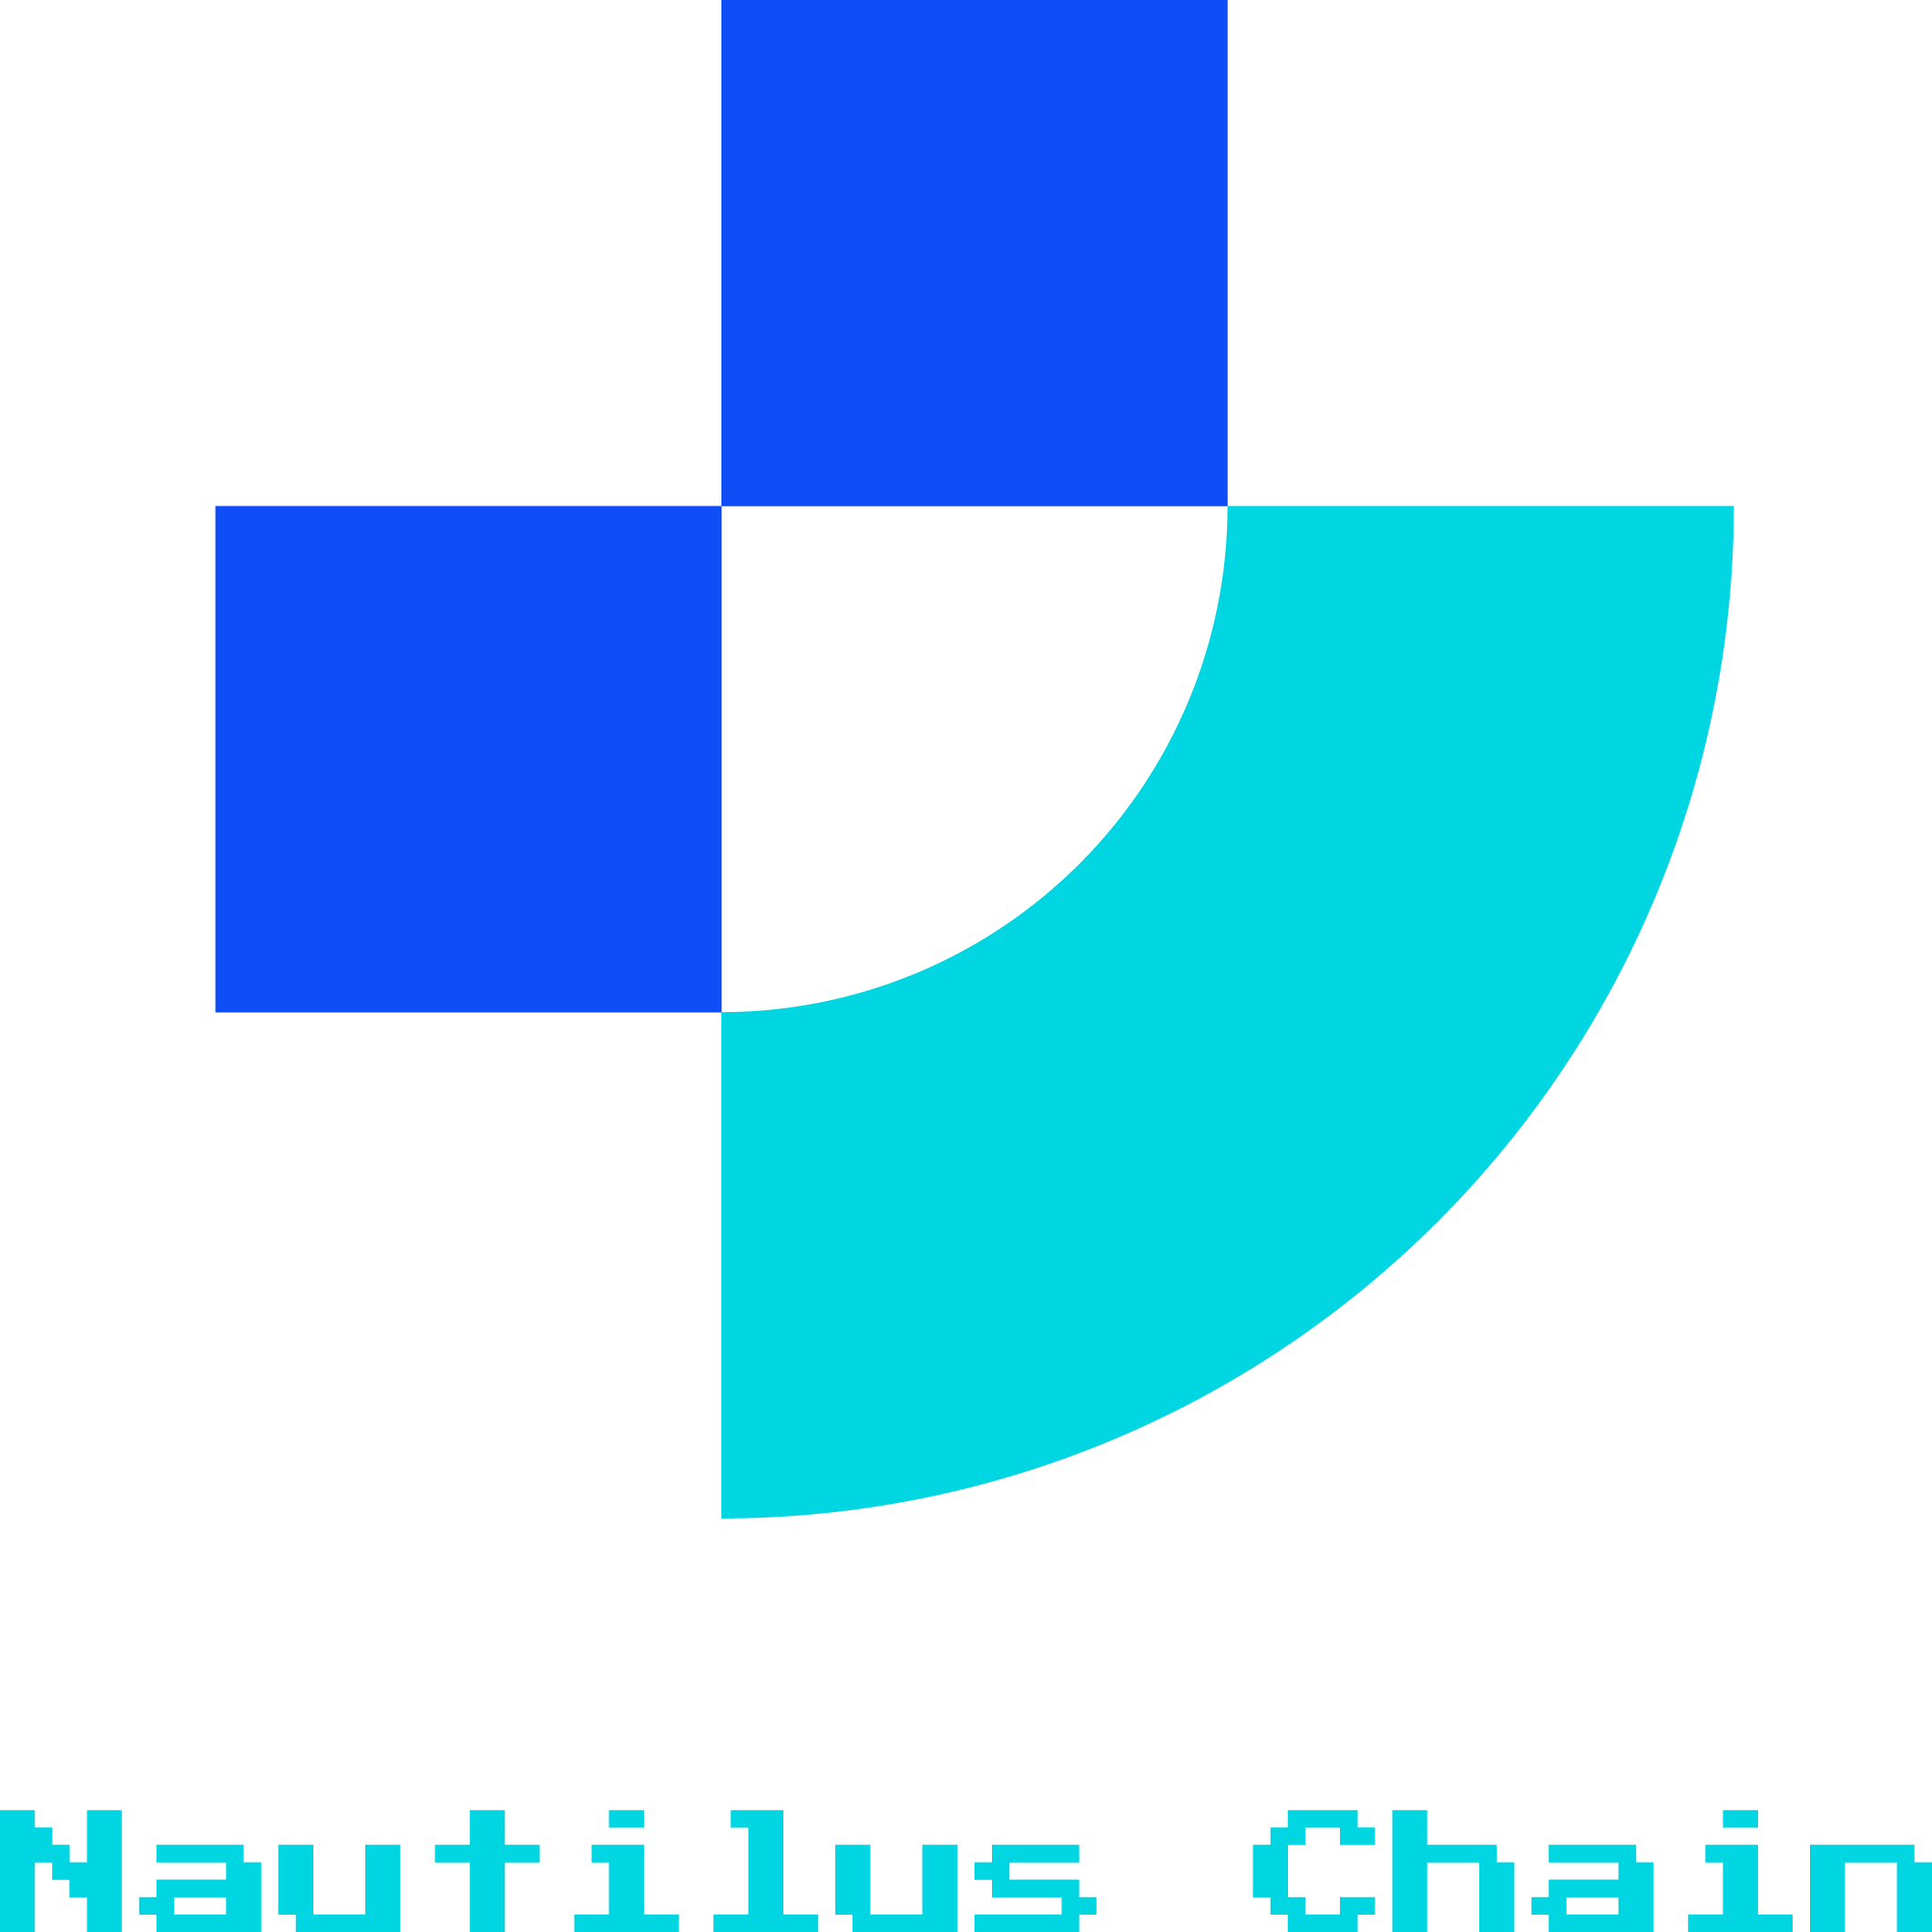 Nautilus Chain